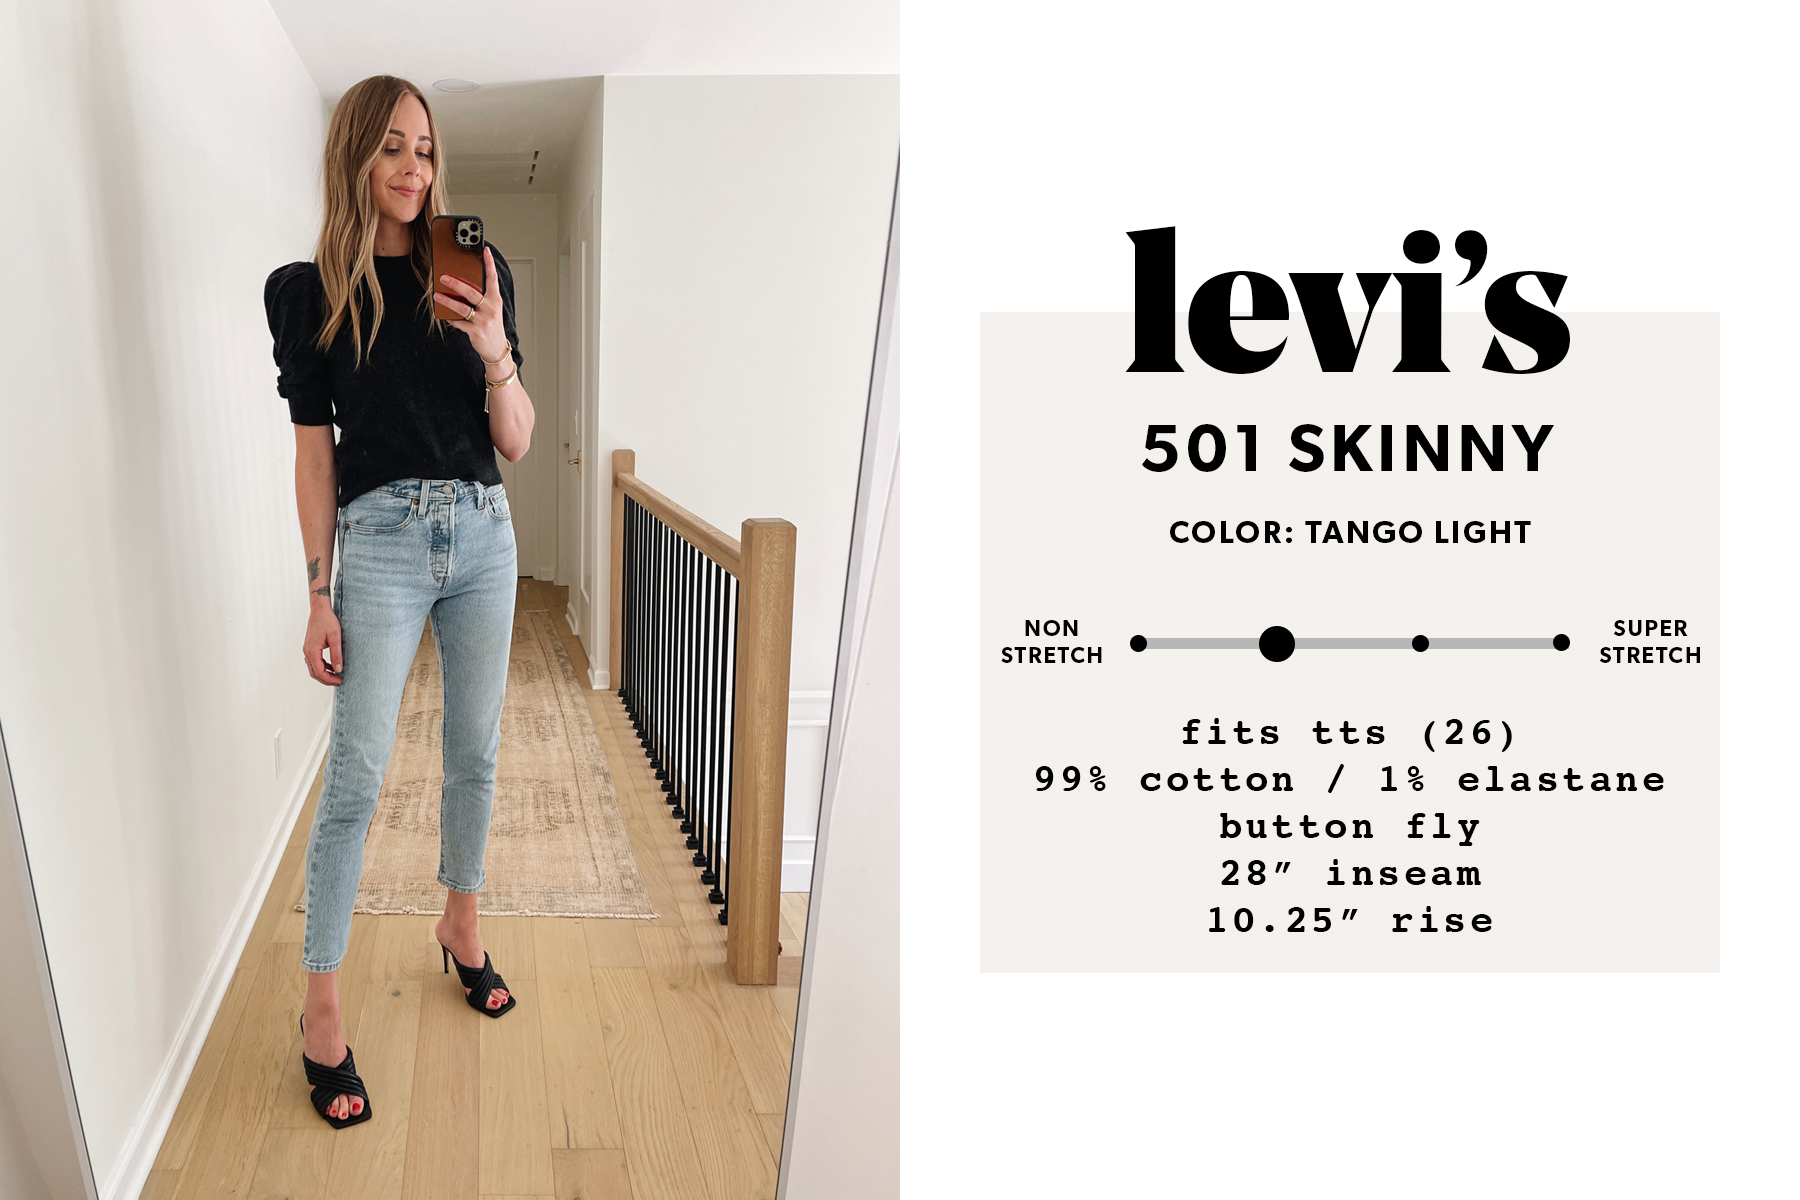 Levis 501 Skinny